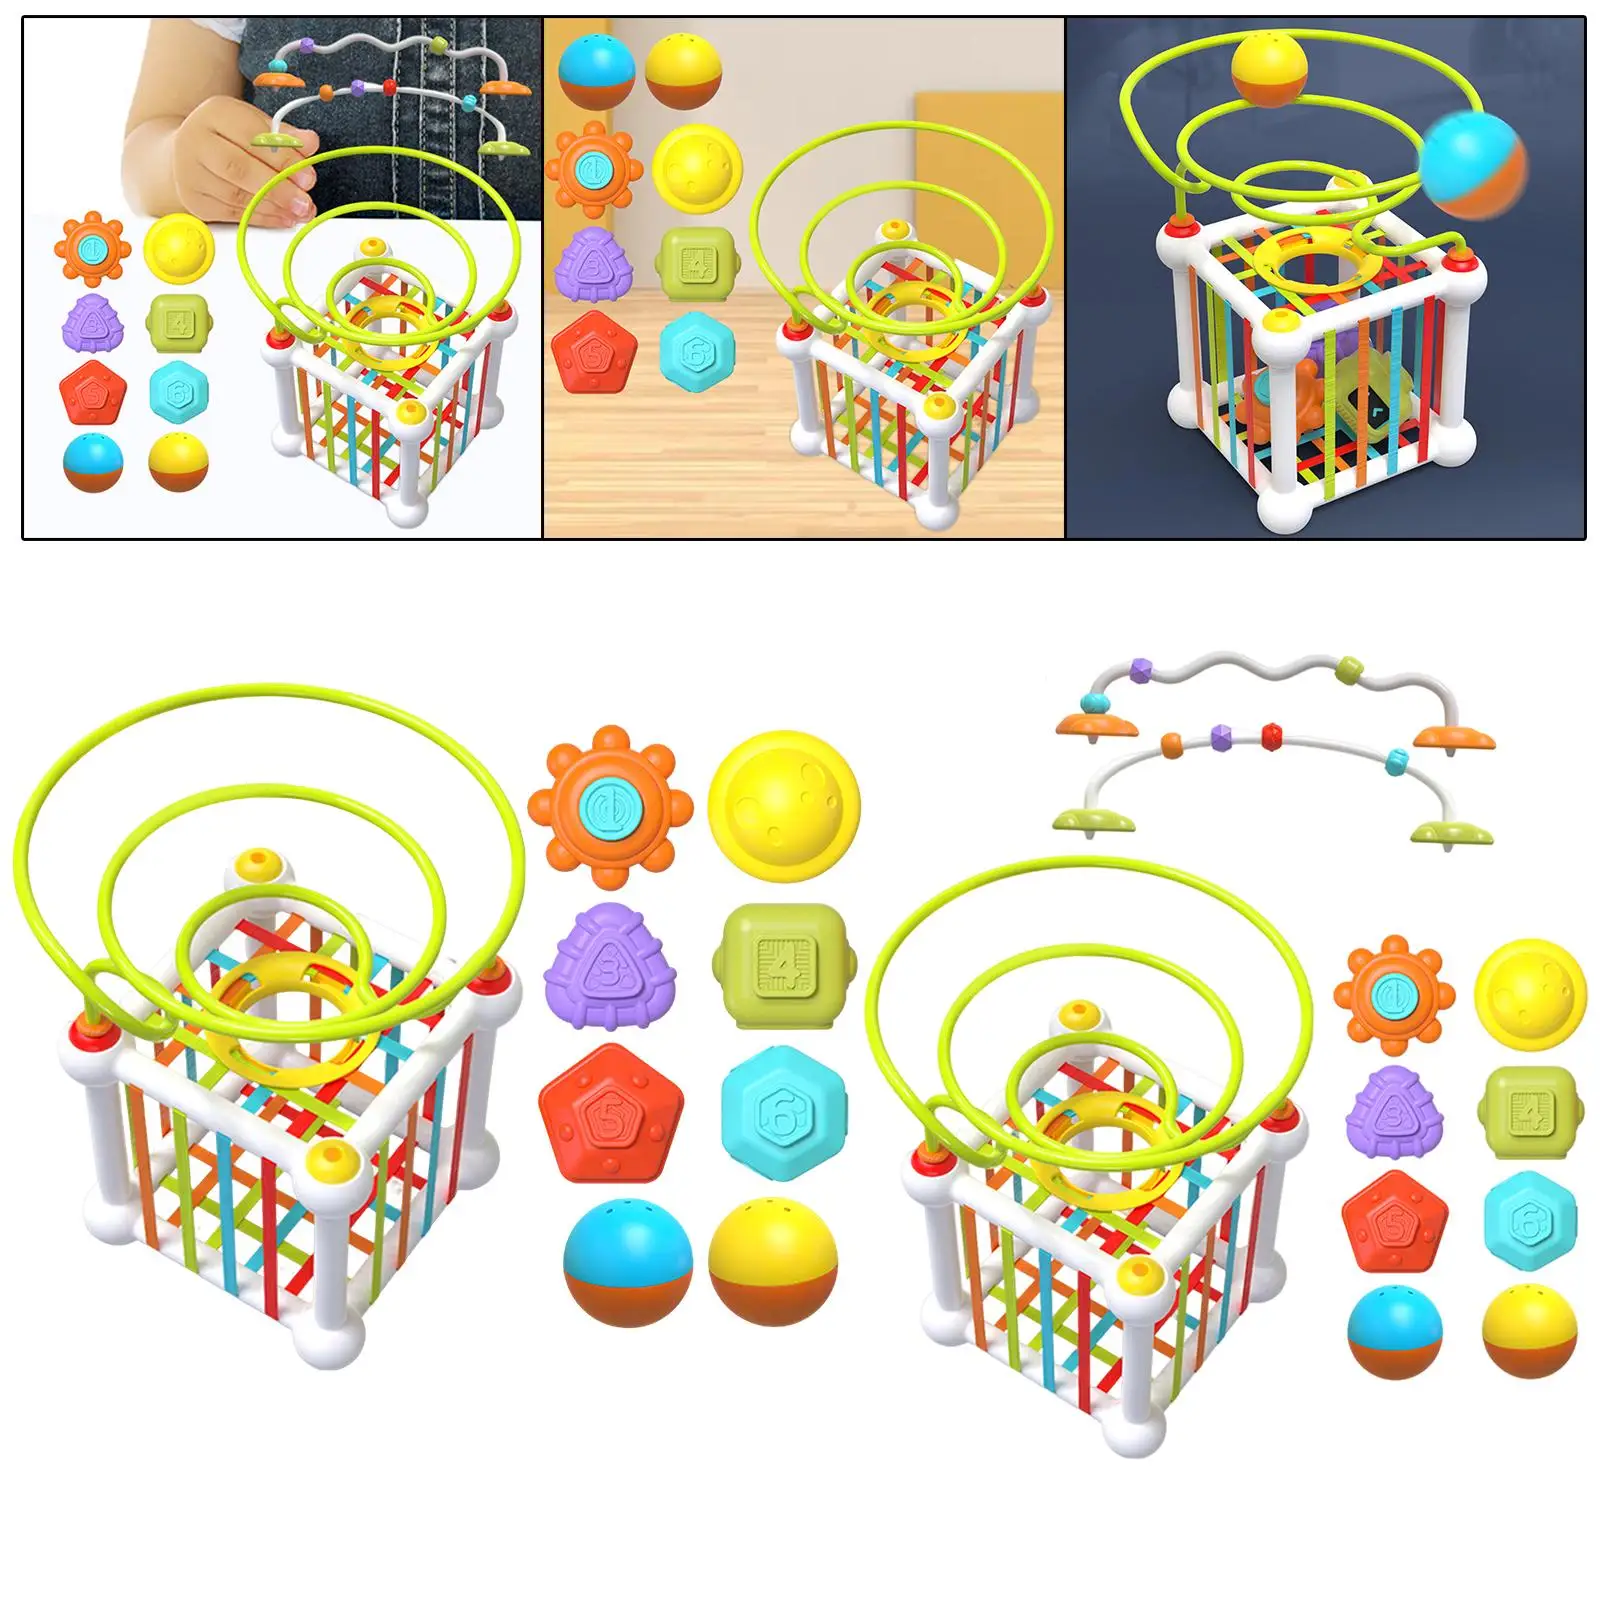 Textured Balls Sorting Games for Coordination Sensory Exploration Birthday